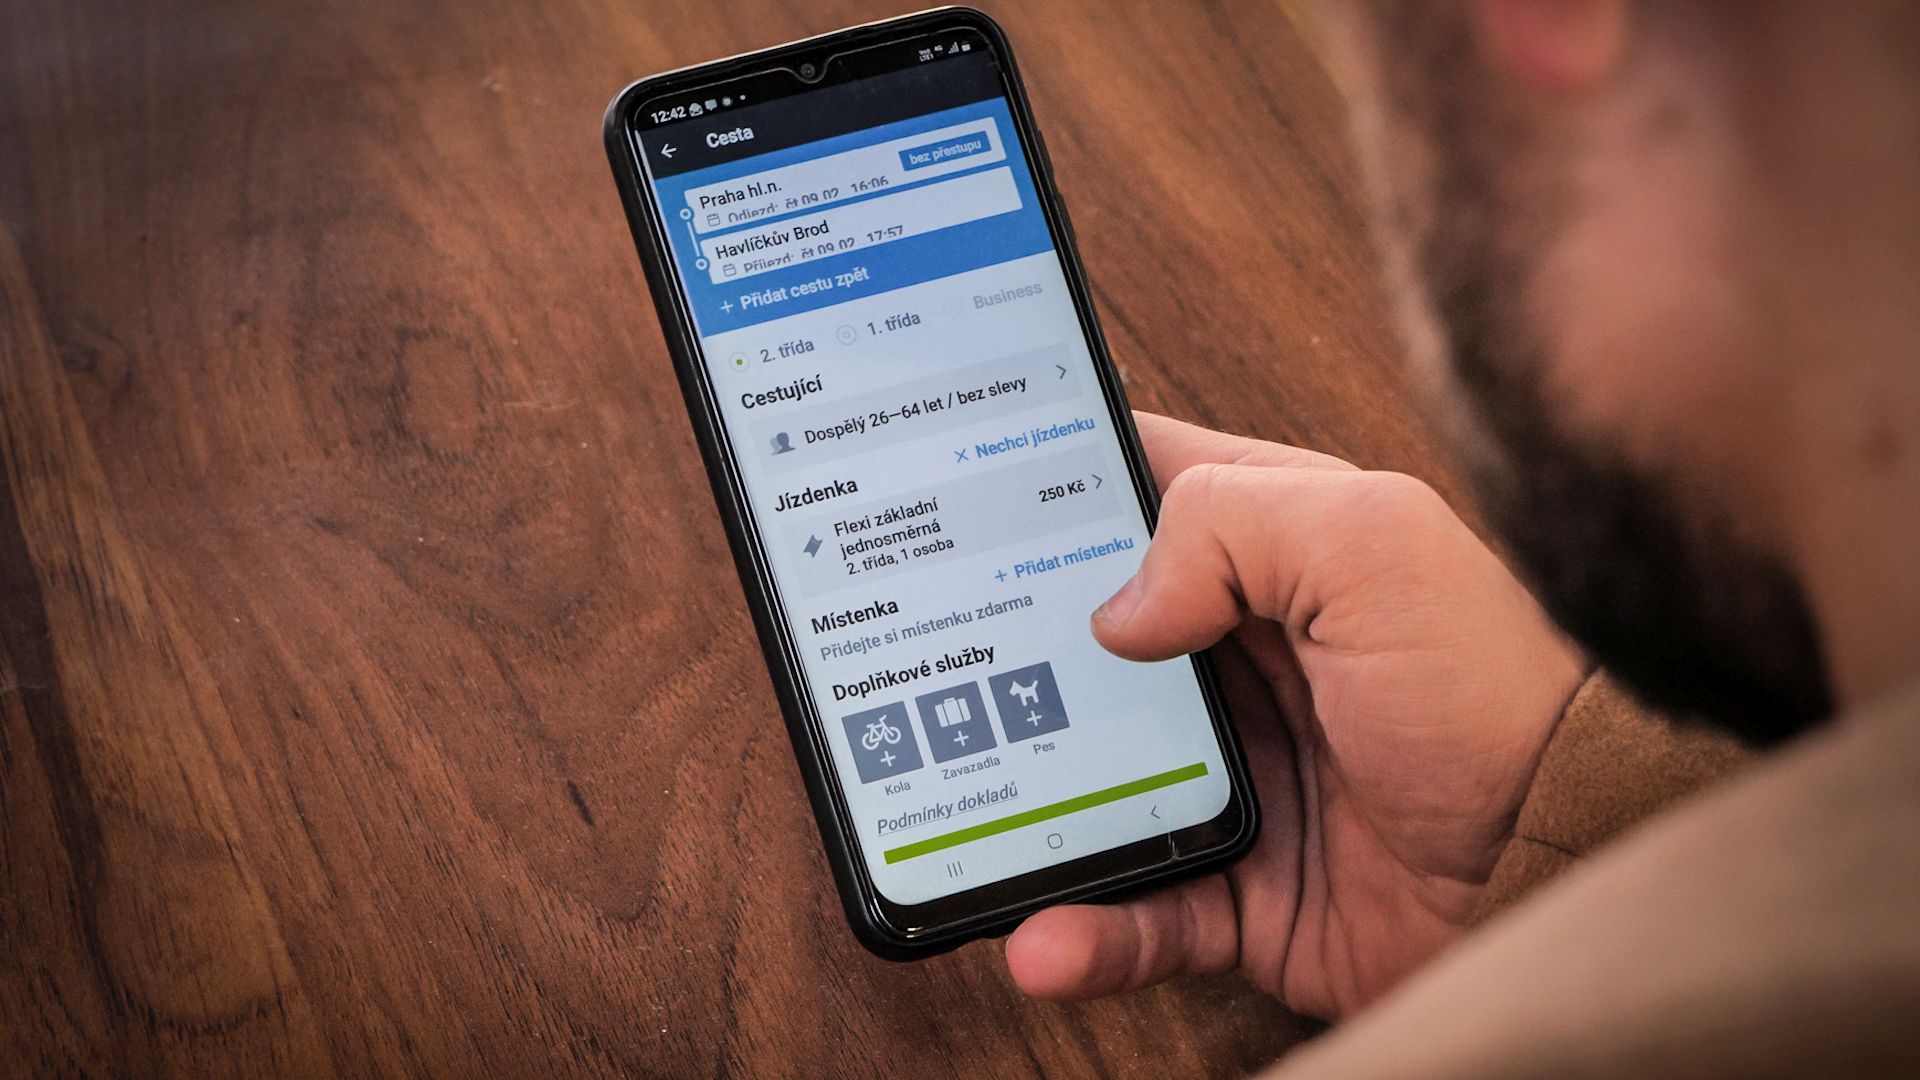 The "Můj vlak" mobile application simplifies passenger check-in.